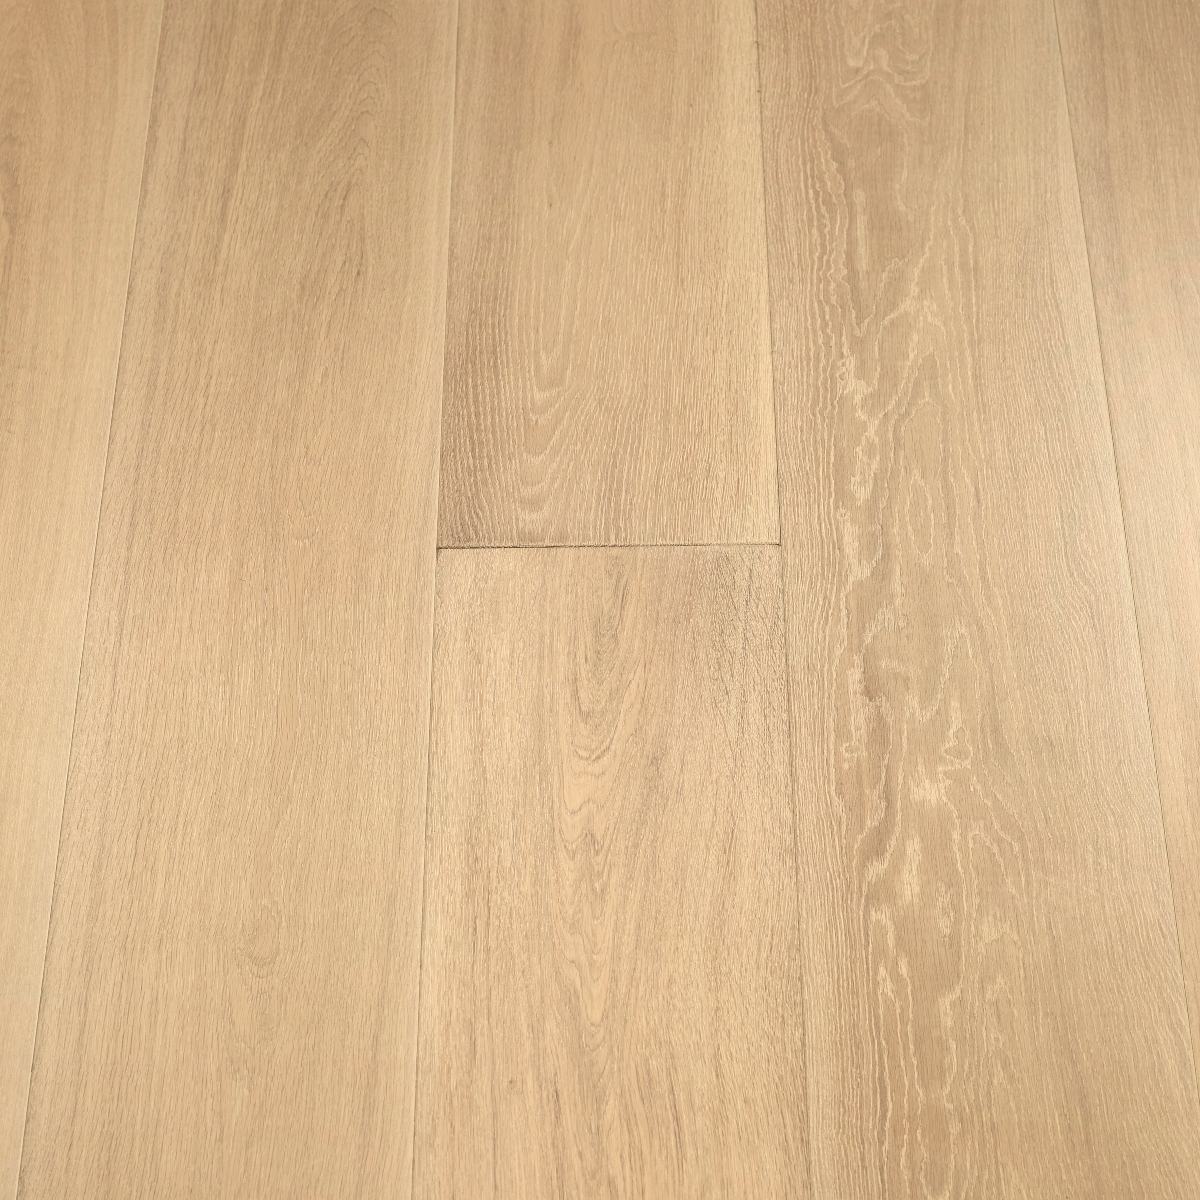 Dough 190mm x 18mm x 1900mm Bespoke Wood Flooring